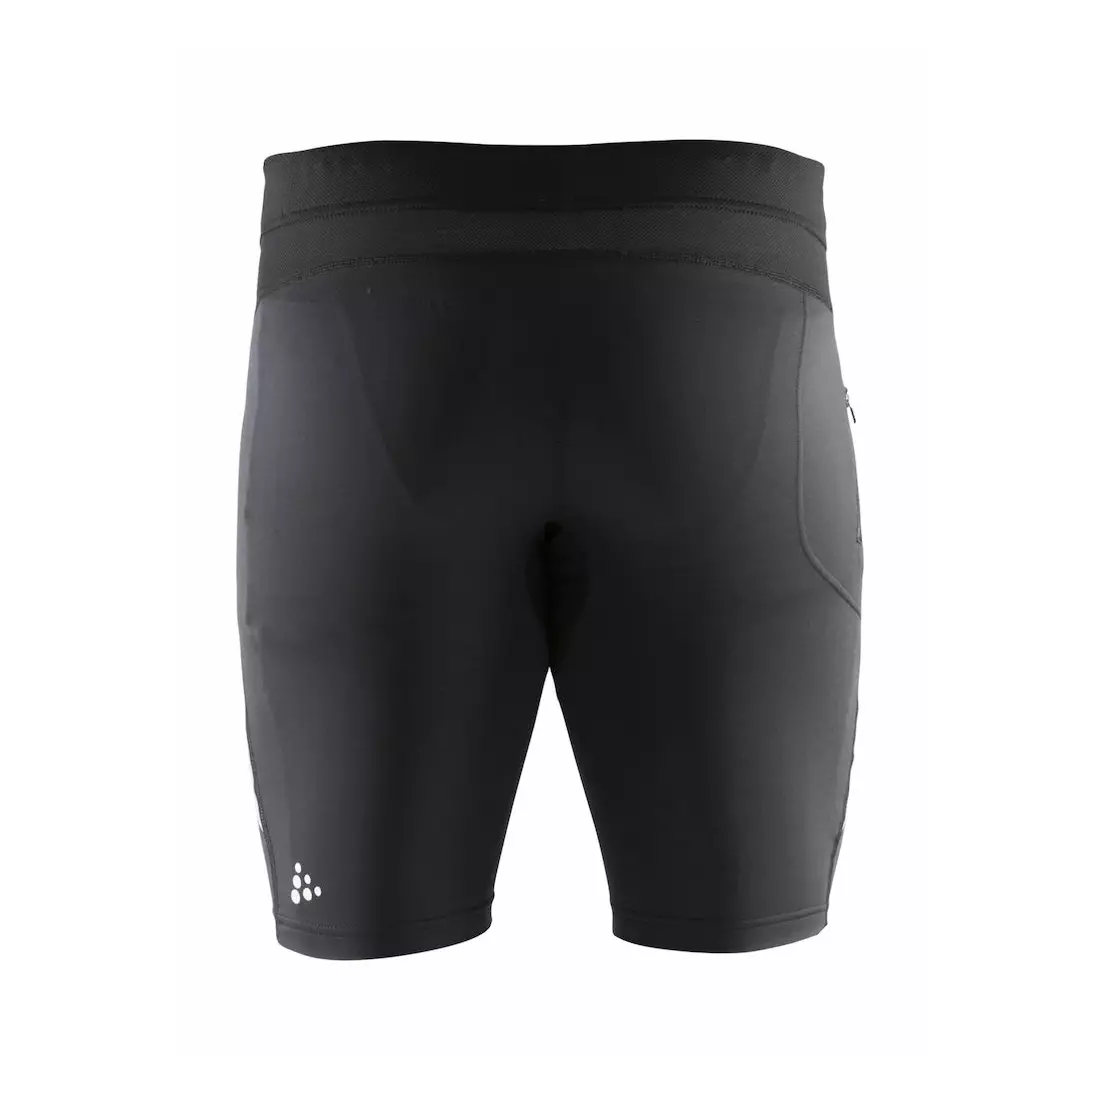 CRAFT DEVOTION men's running shorts 1903975-9999